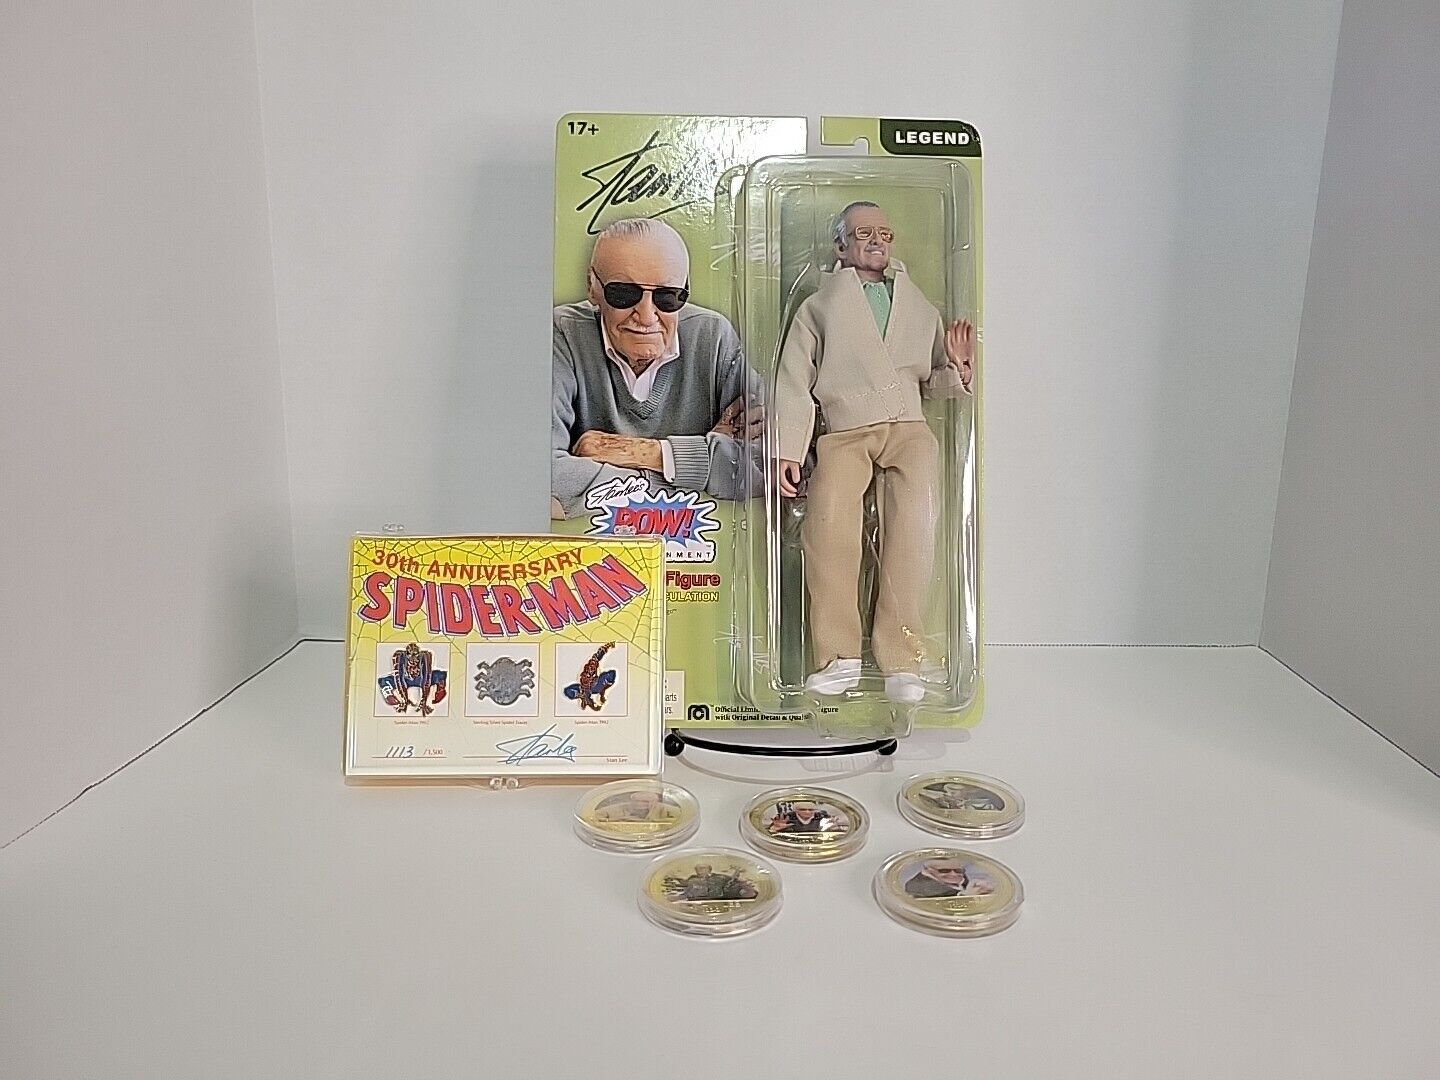 RARE Autographed STAN LEE Spider-man Pin Set Legend Action Figure & 5 Coin Lot